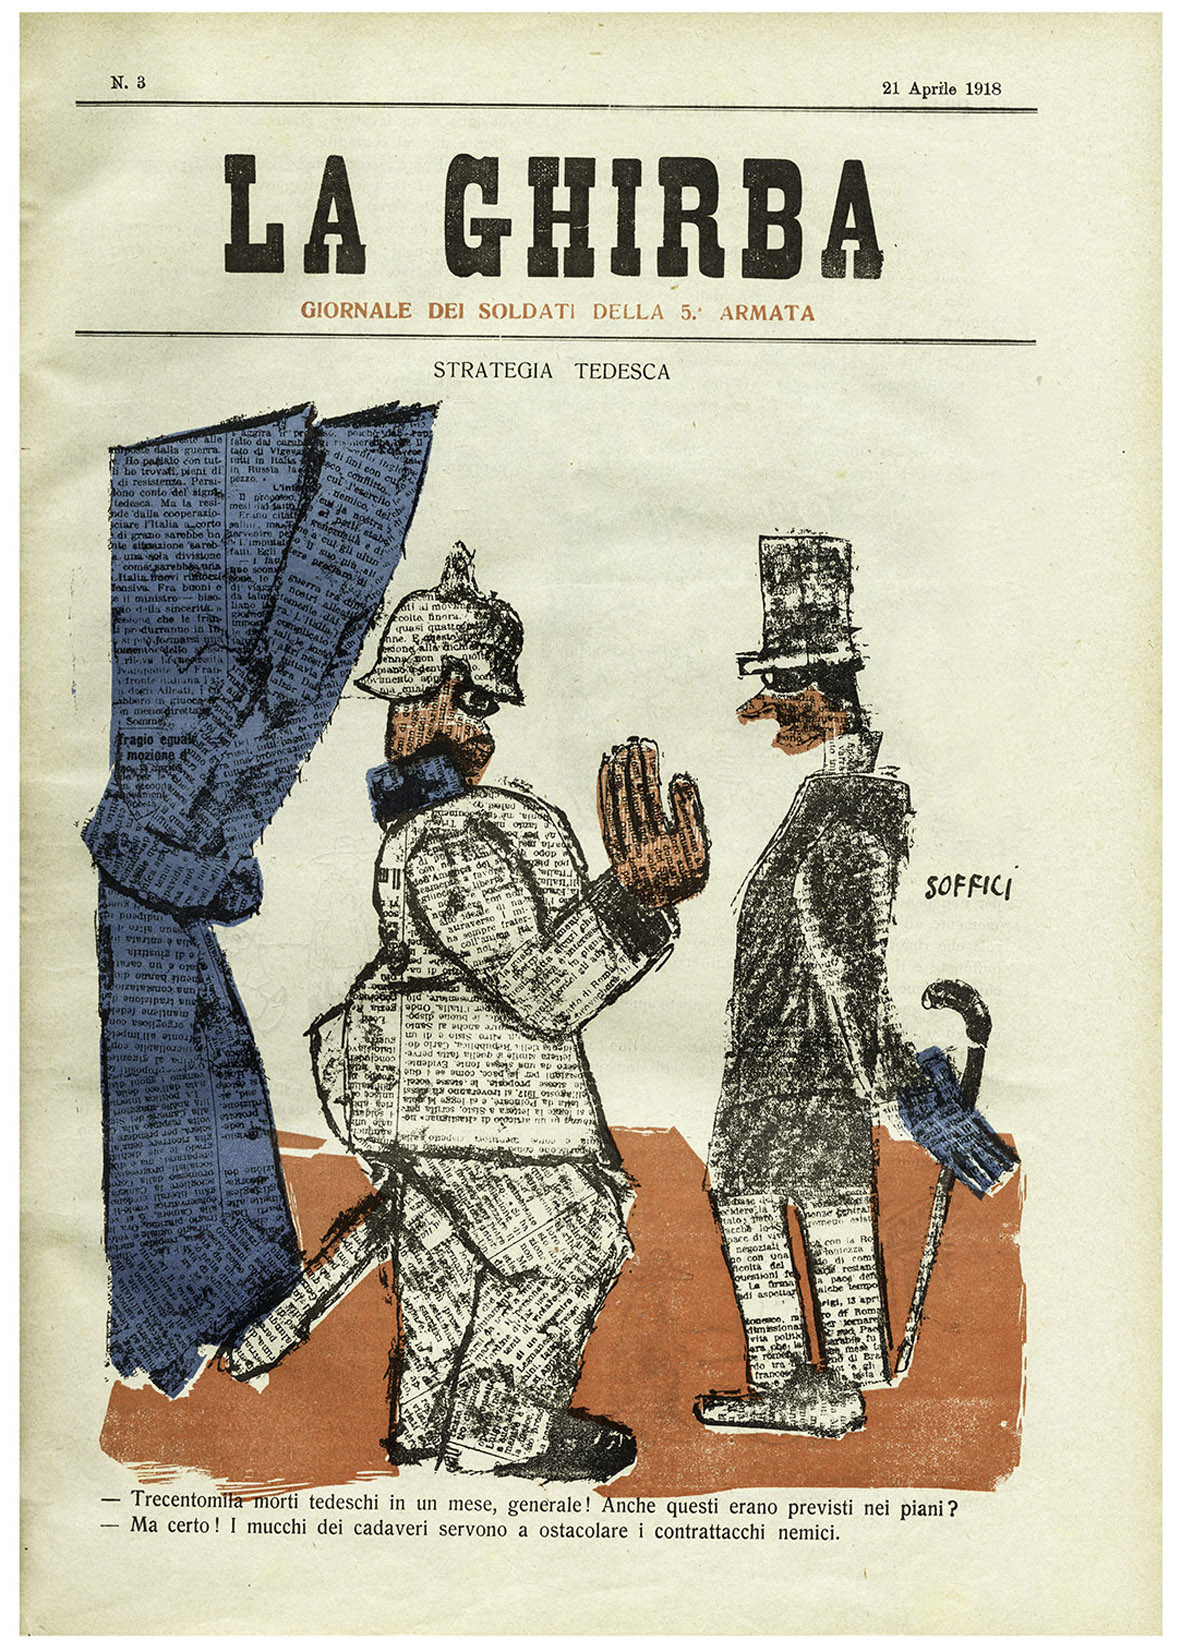 Ardengo Soffici, Trecentomila morti in un mese Generale!..., copertina de “La Ghirba” n. 3, 21 aprile 1918